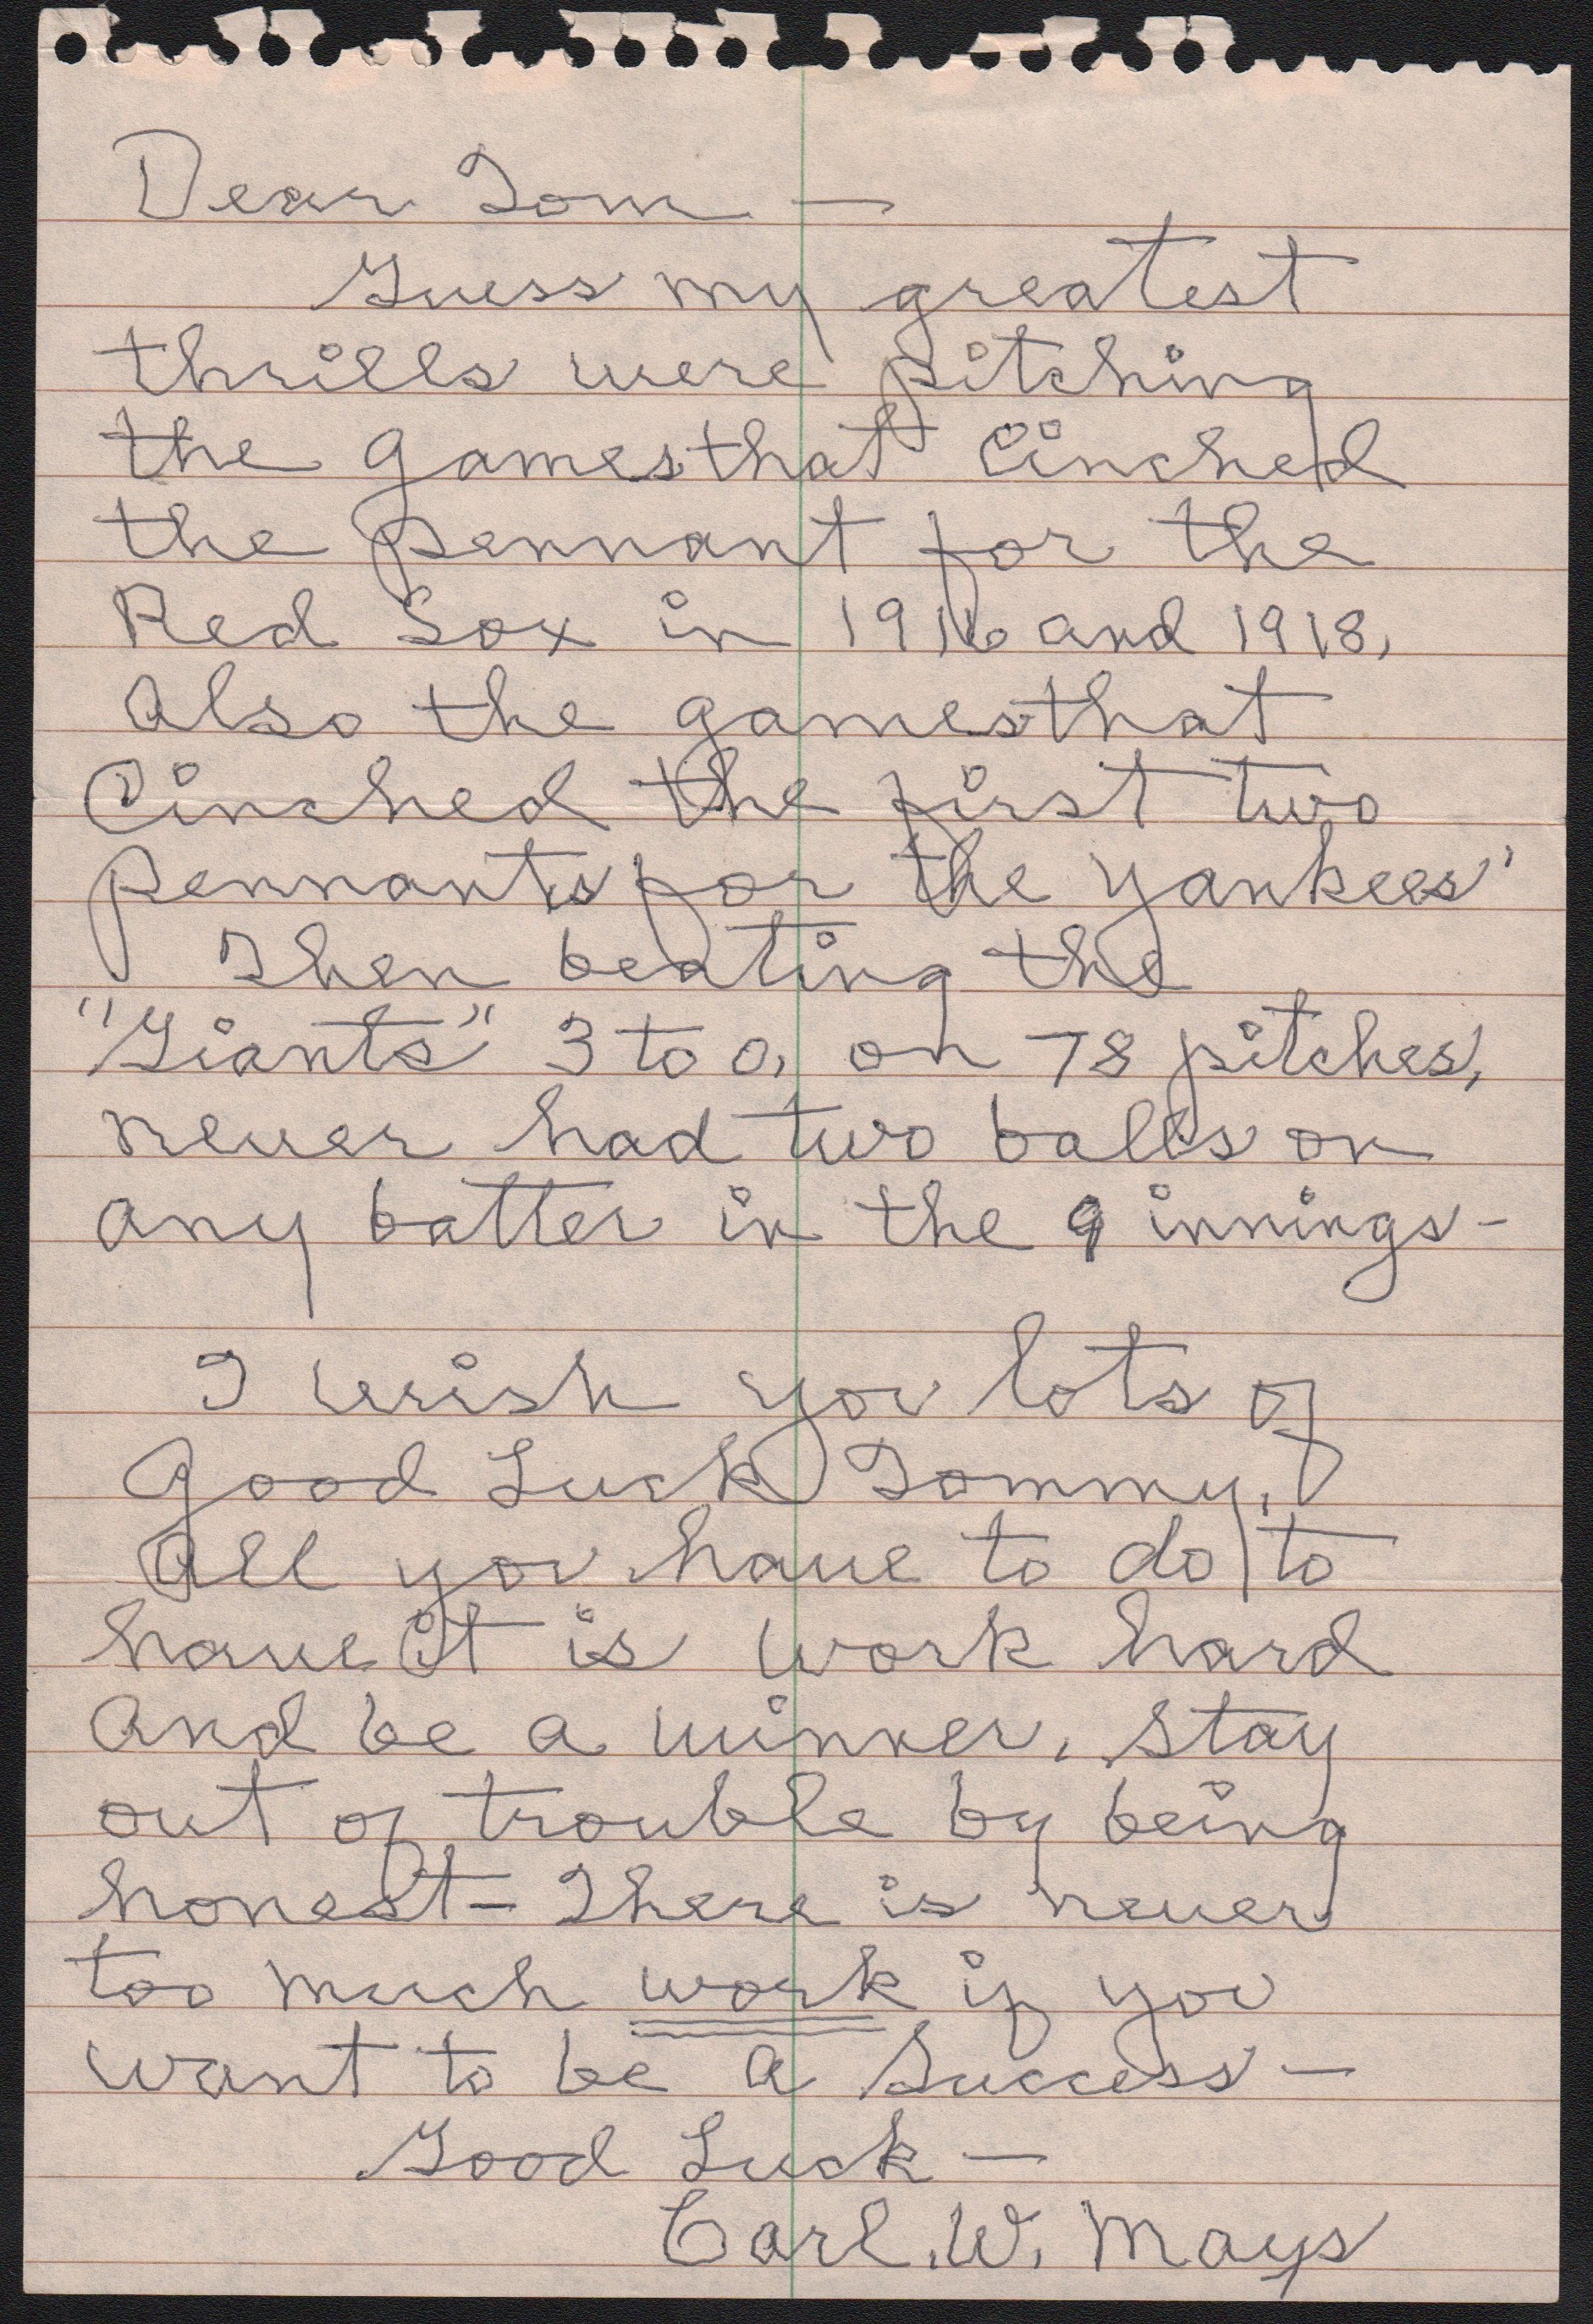 Baseball Autographs - Carl W. Mays "Greatest Thrill" Handwritten Letter